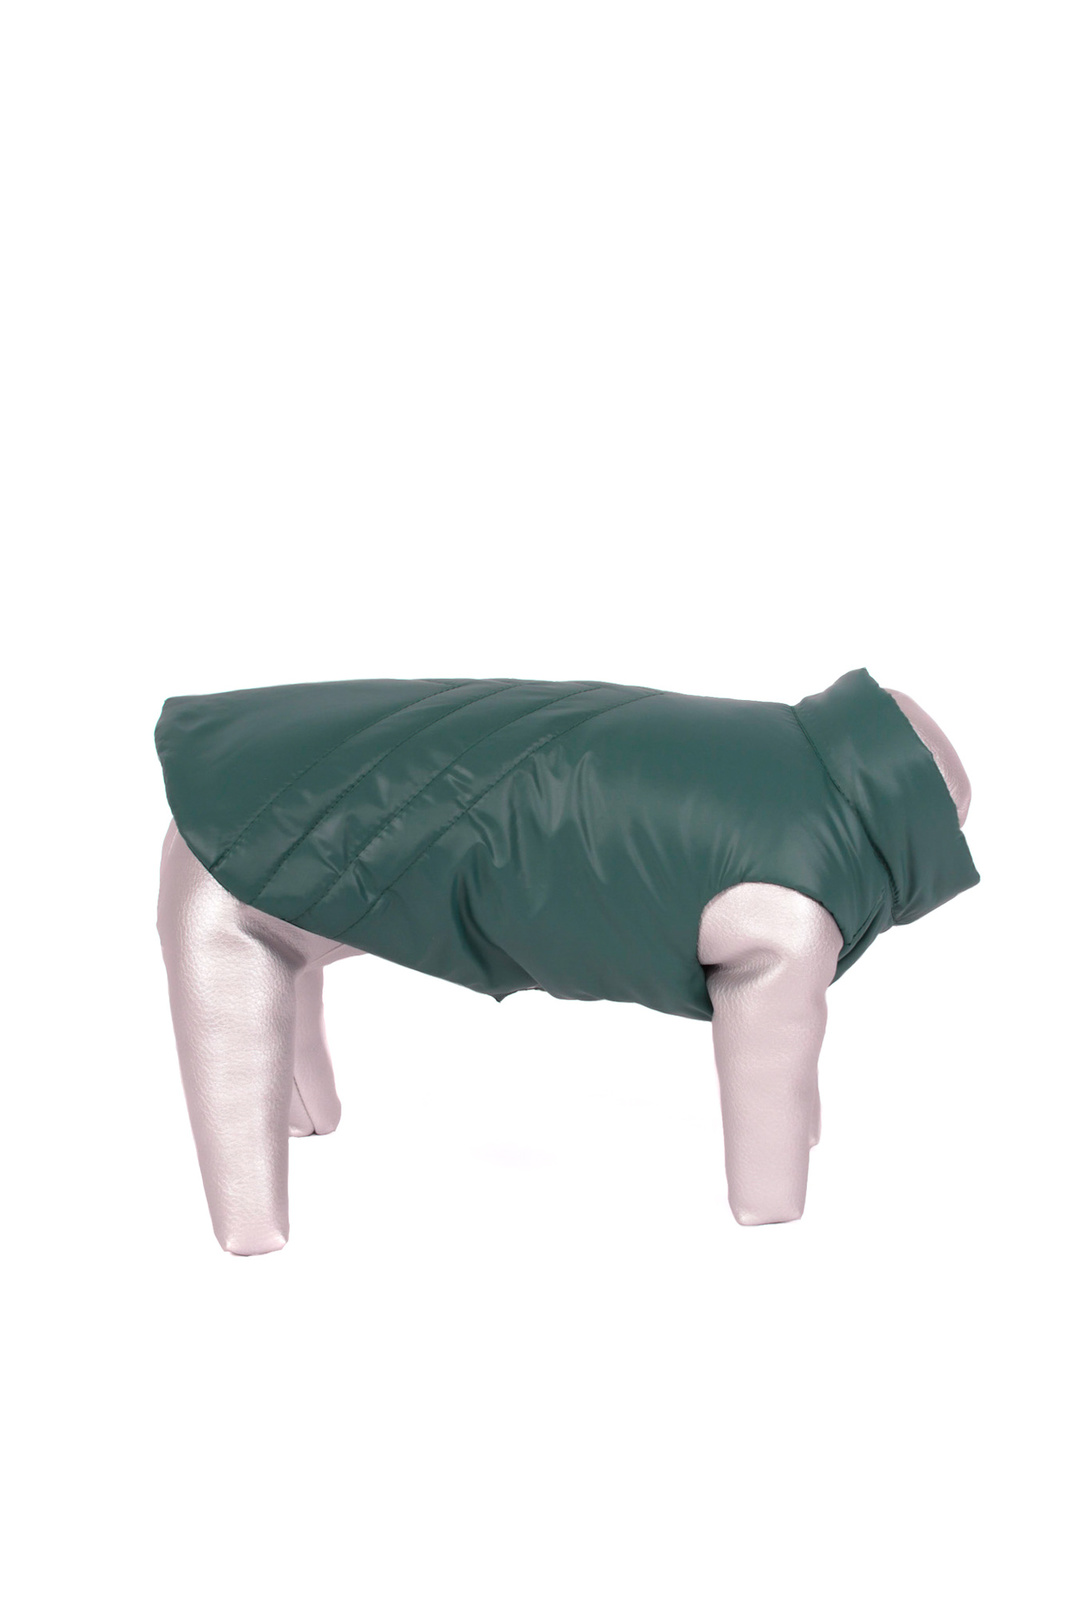 Yoriki жилет для собак Страйп, зеленый, унисекс (XL)